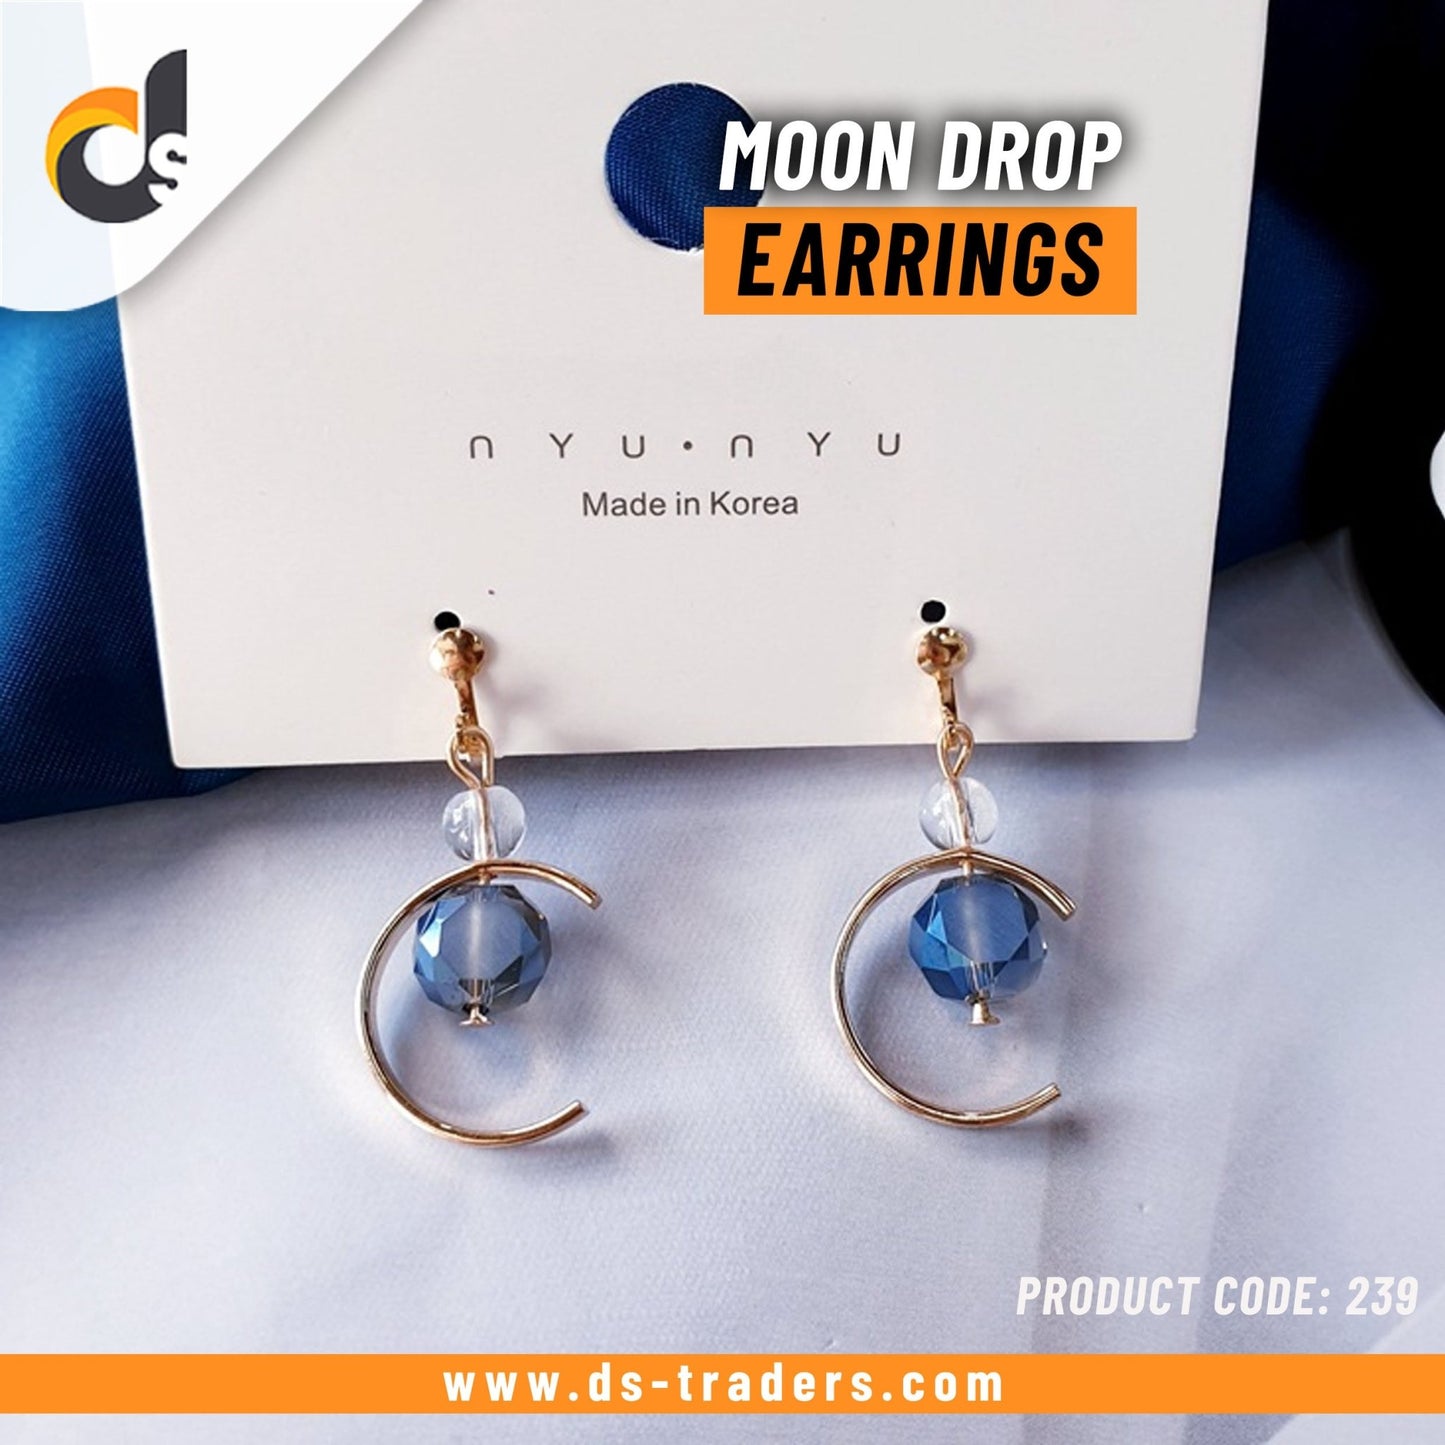 Moon Drop Earrings - DS Traders